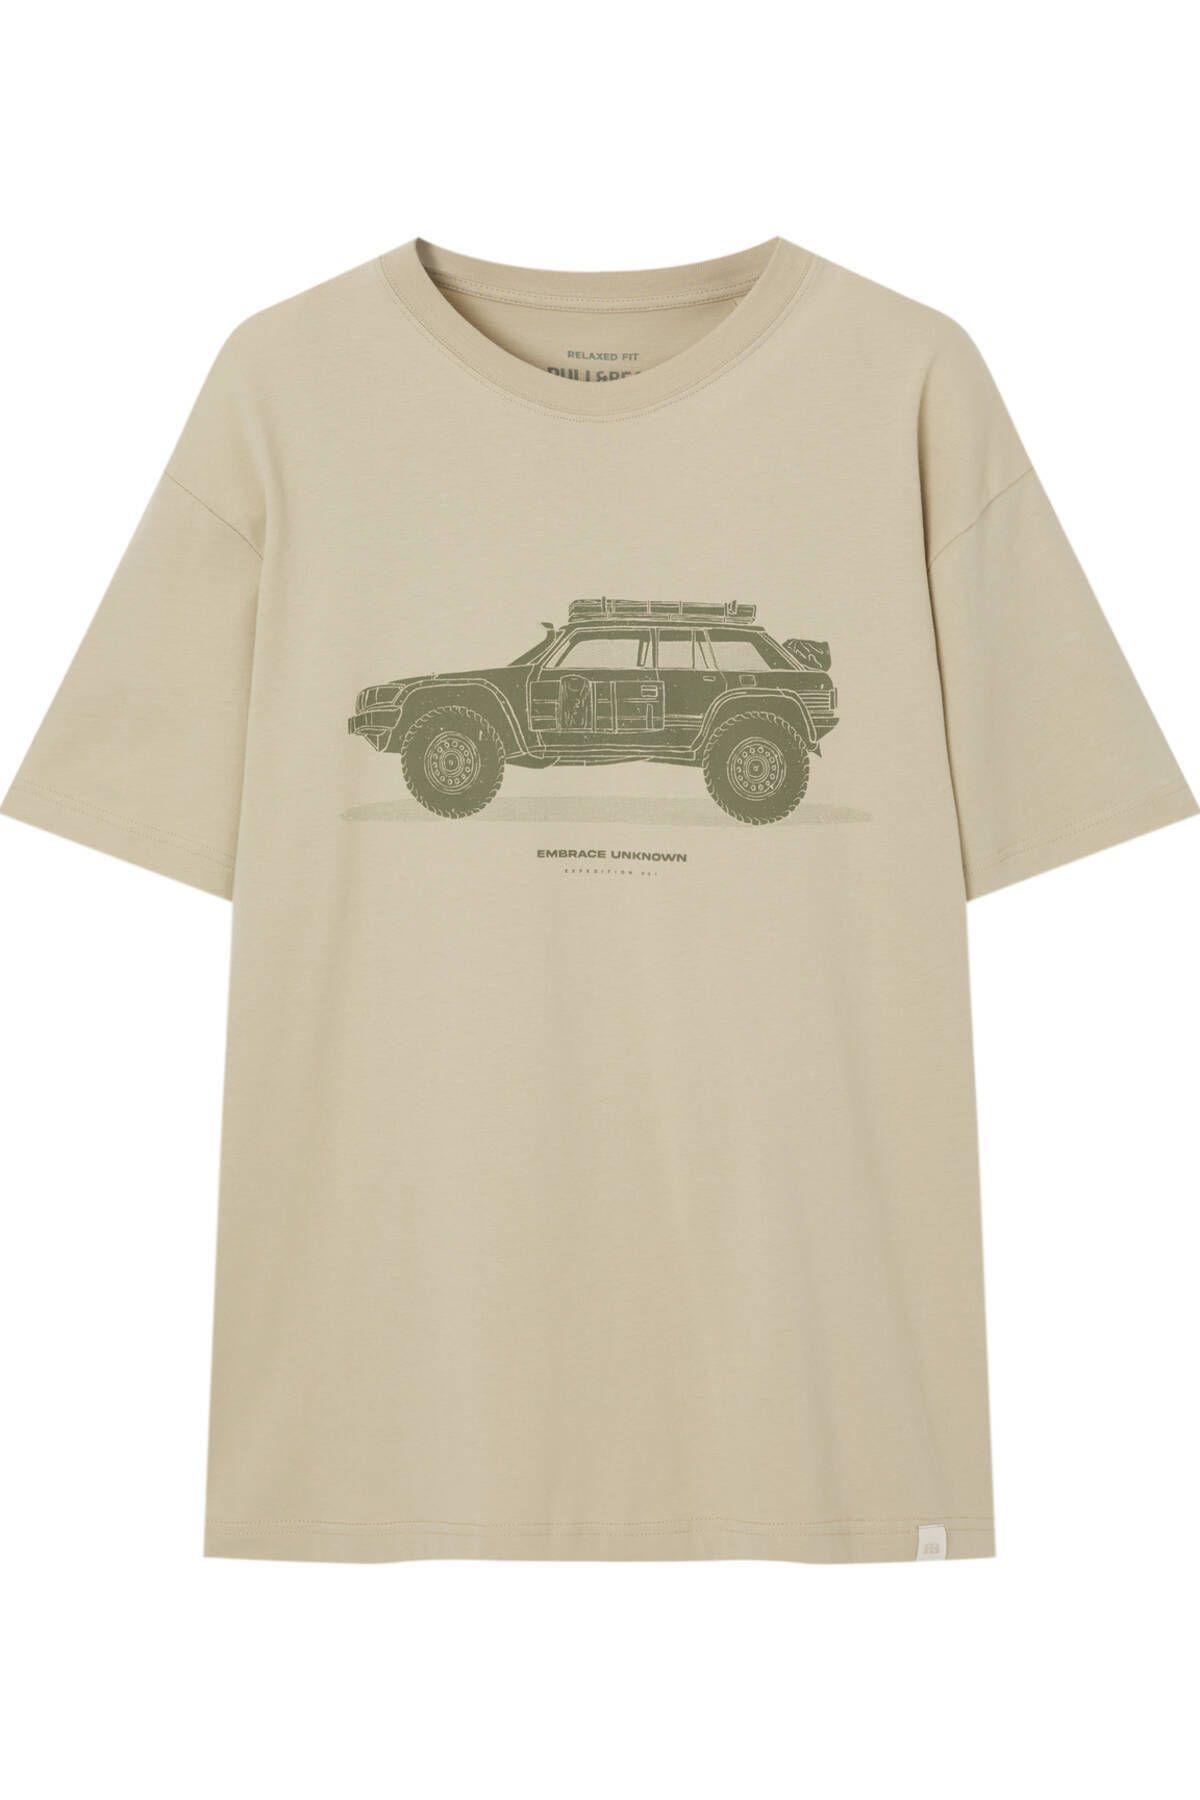 Pull & Bear Motor grafik baskılı t-shirt